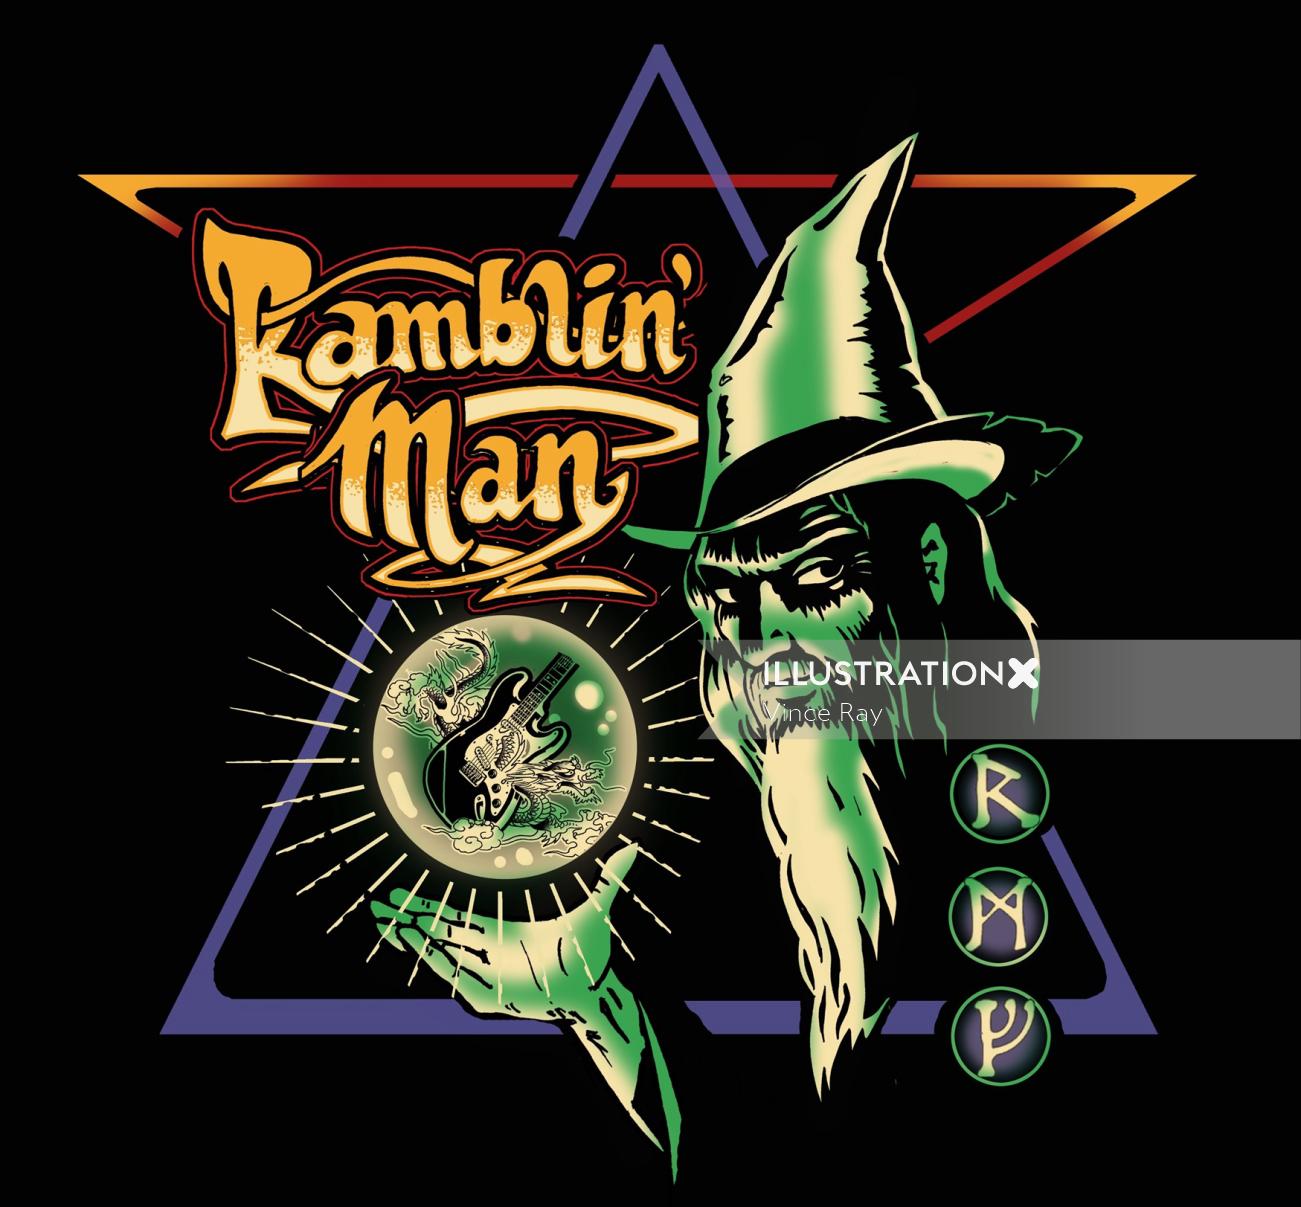 Character design of ramblin man 